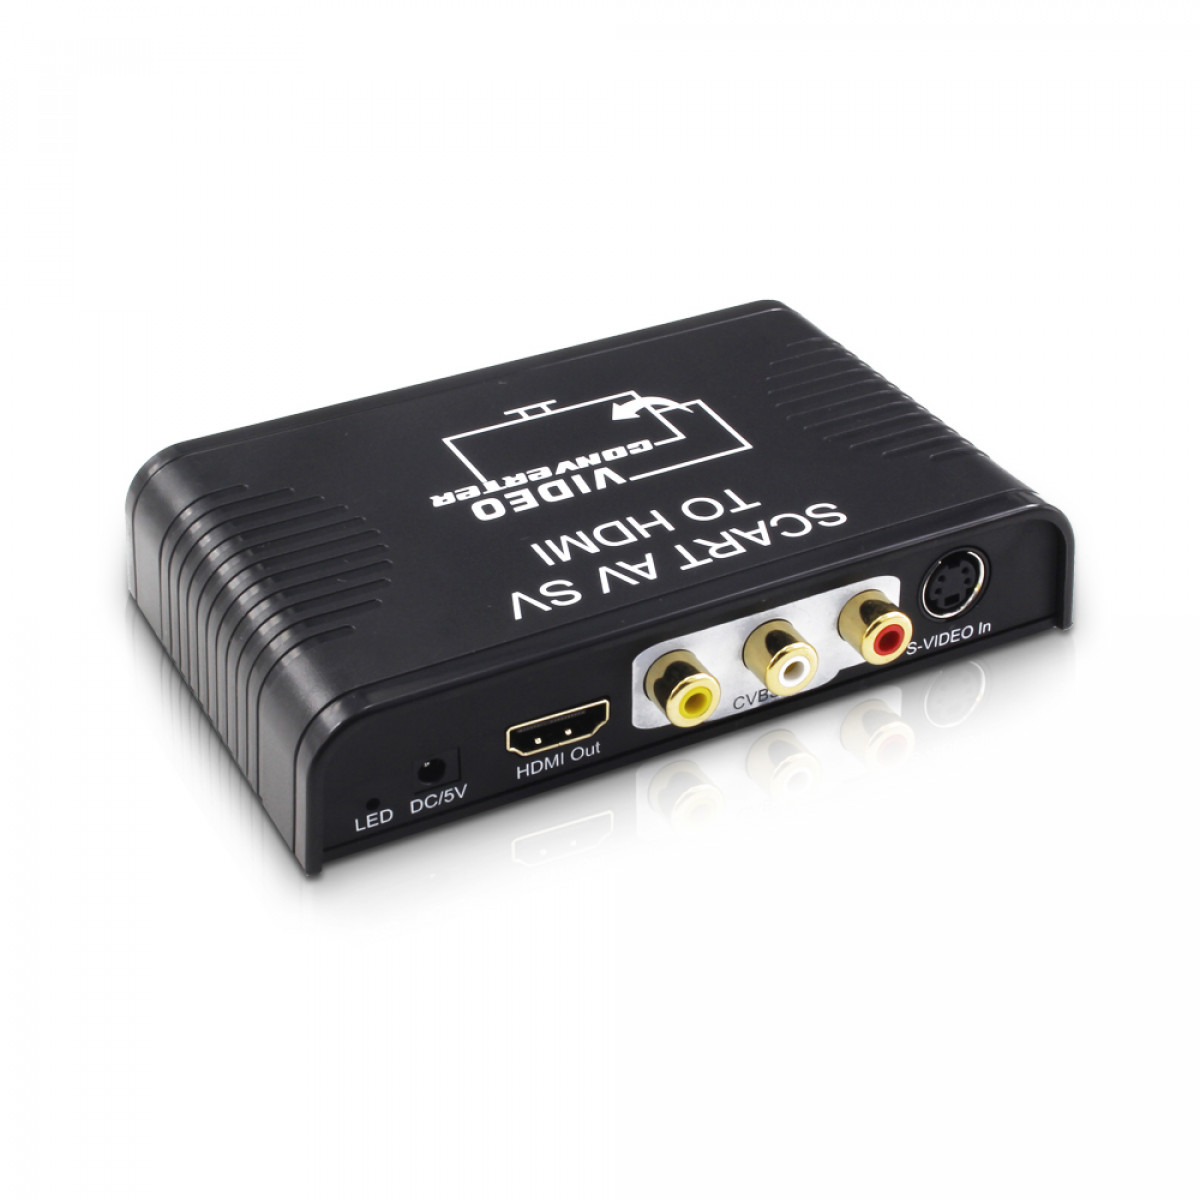 HDMI 1080P INF Konverter zu S-Video HDMI-Konverter Scart AV